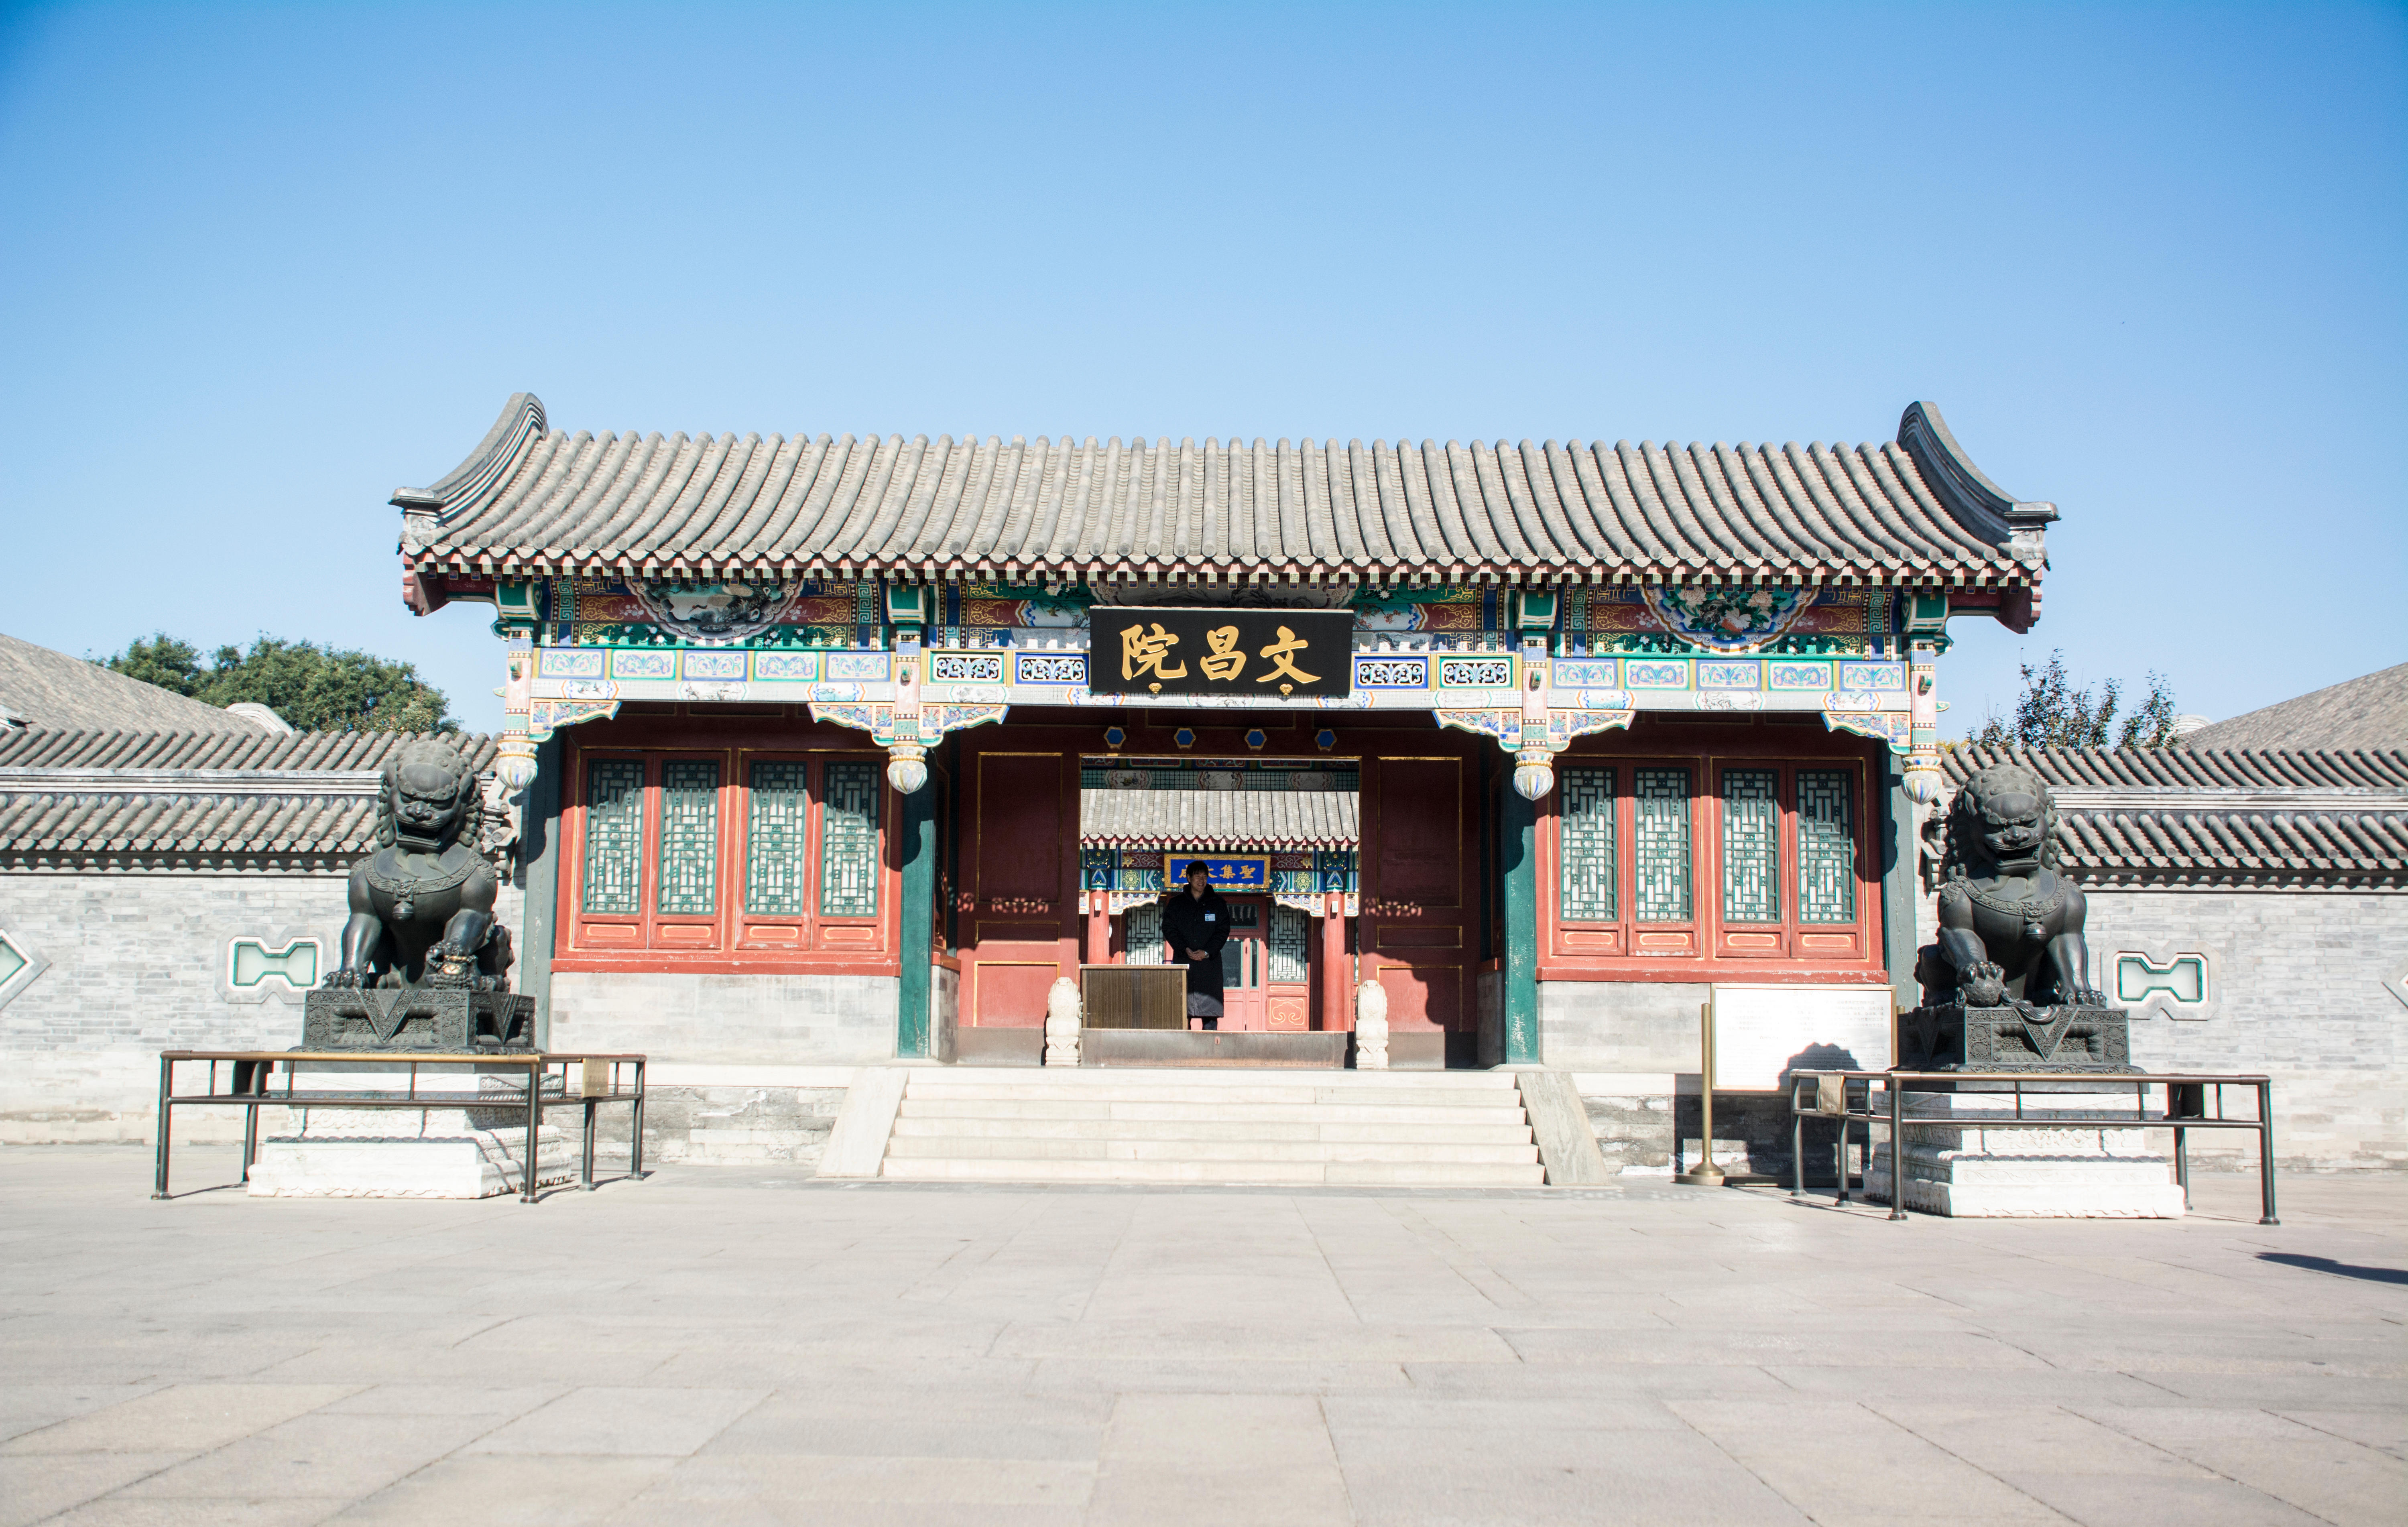 The Most Scenic Spots In Beijing - 